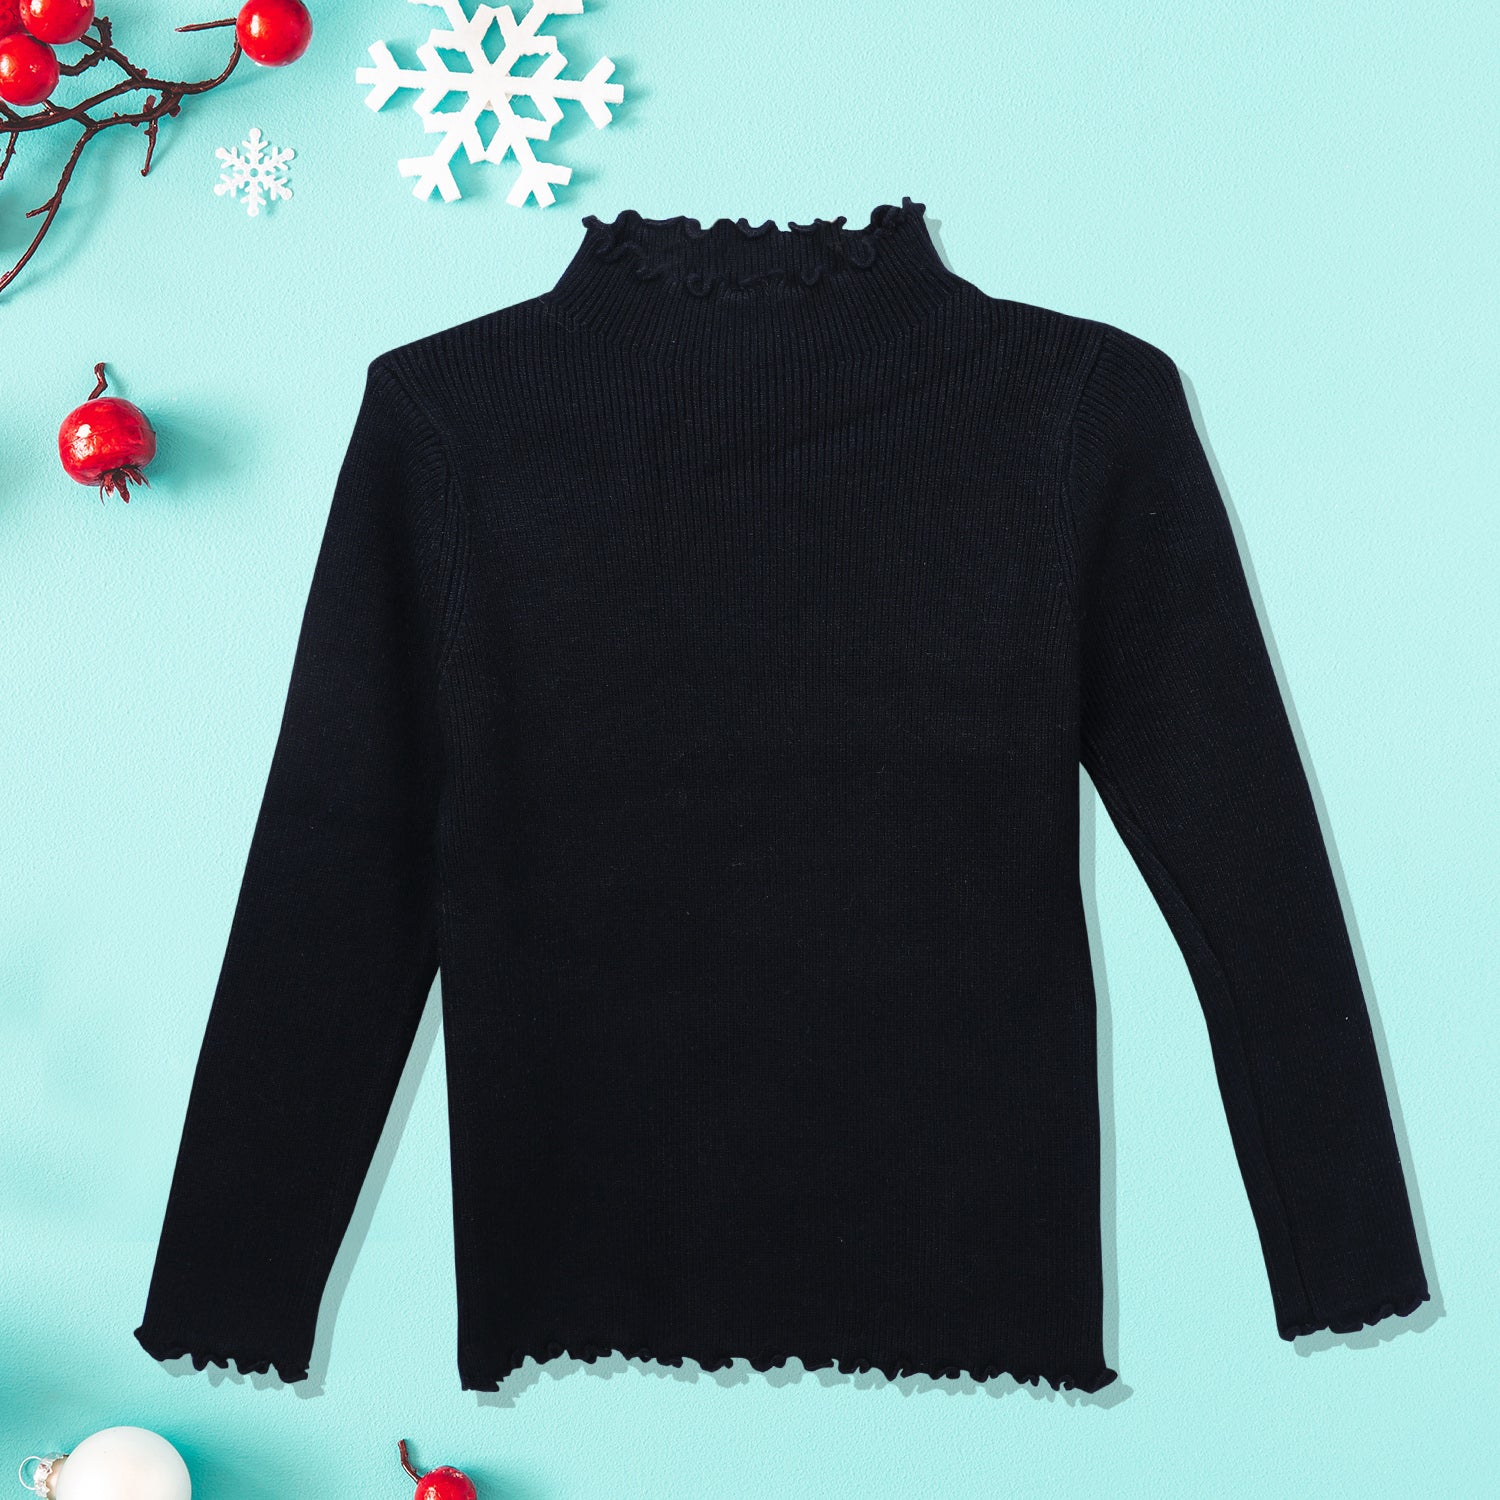 Basic Ribbed Premium Full Sleeves Knitted Kids Sweater - Black